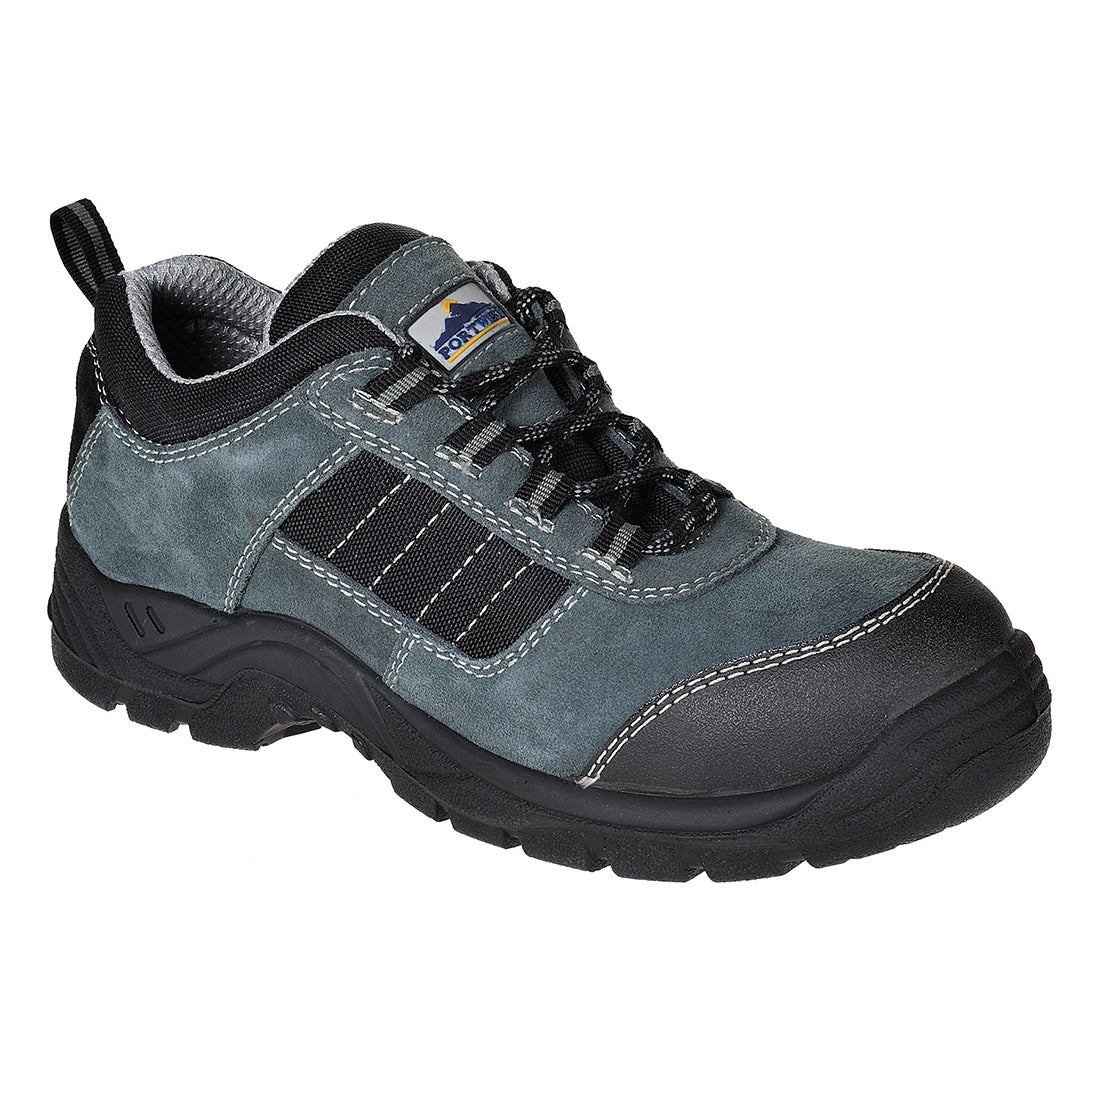 Portwest FC64 - Black Compositelite Trekker Safety Shoe S1 Toe Cap Boot